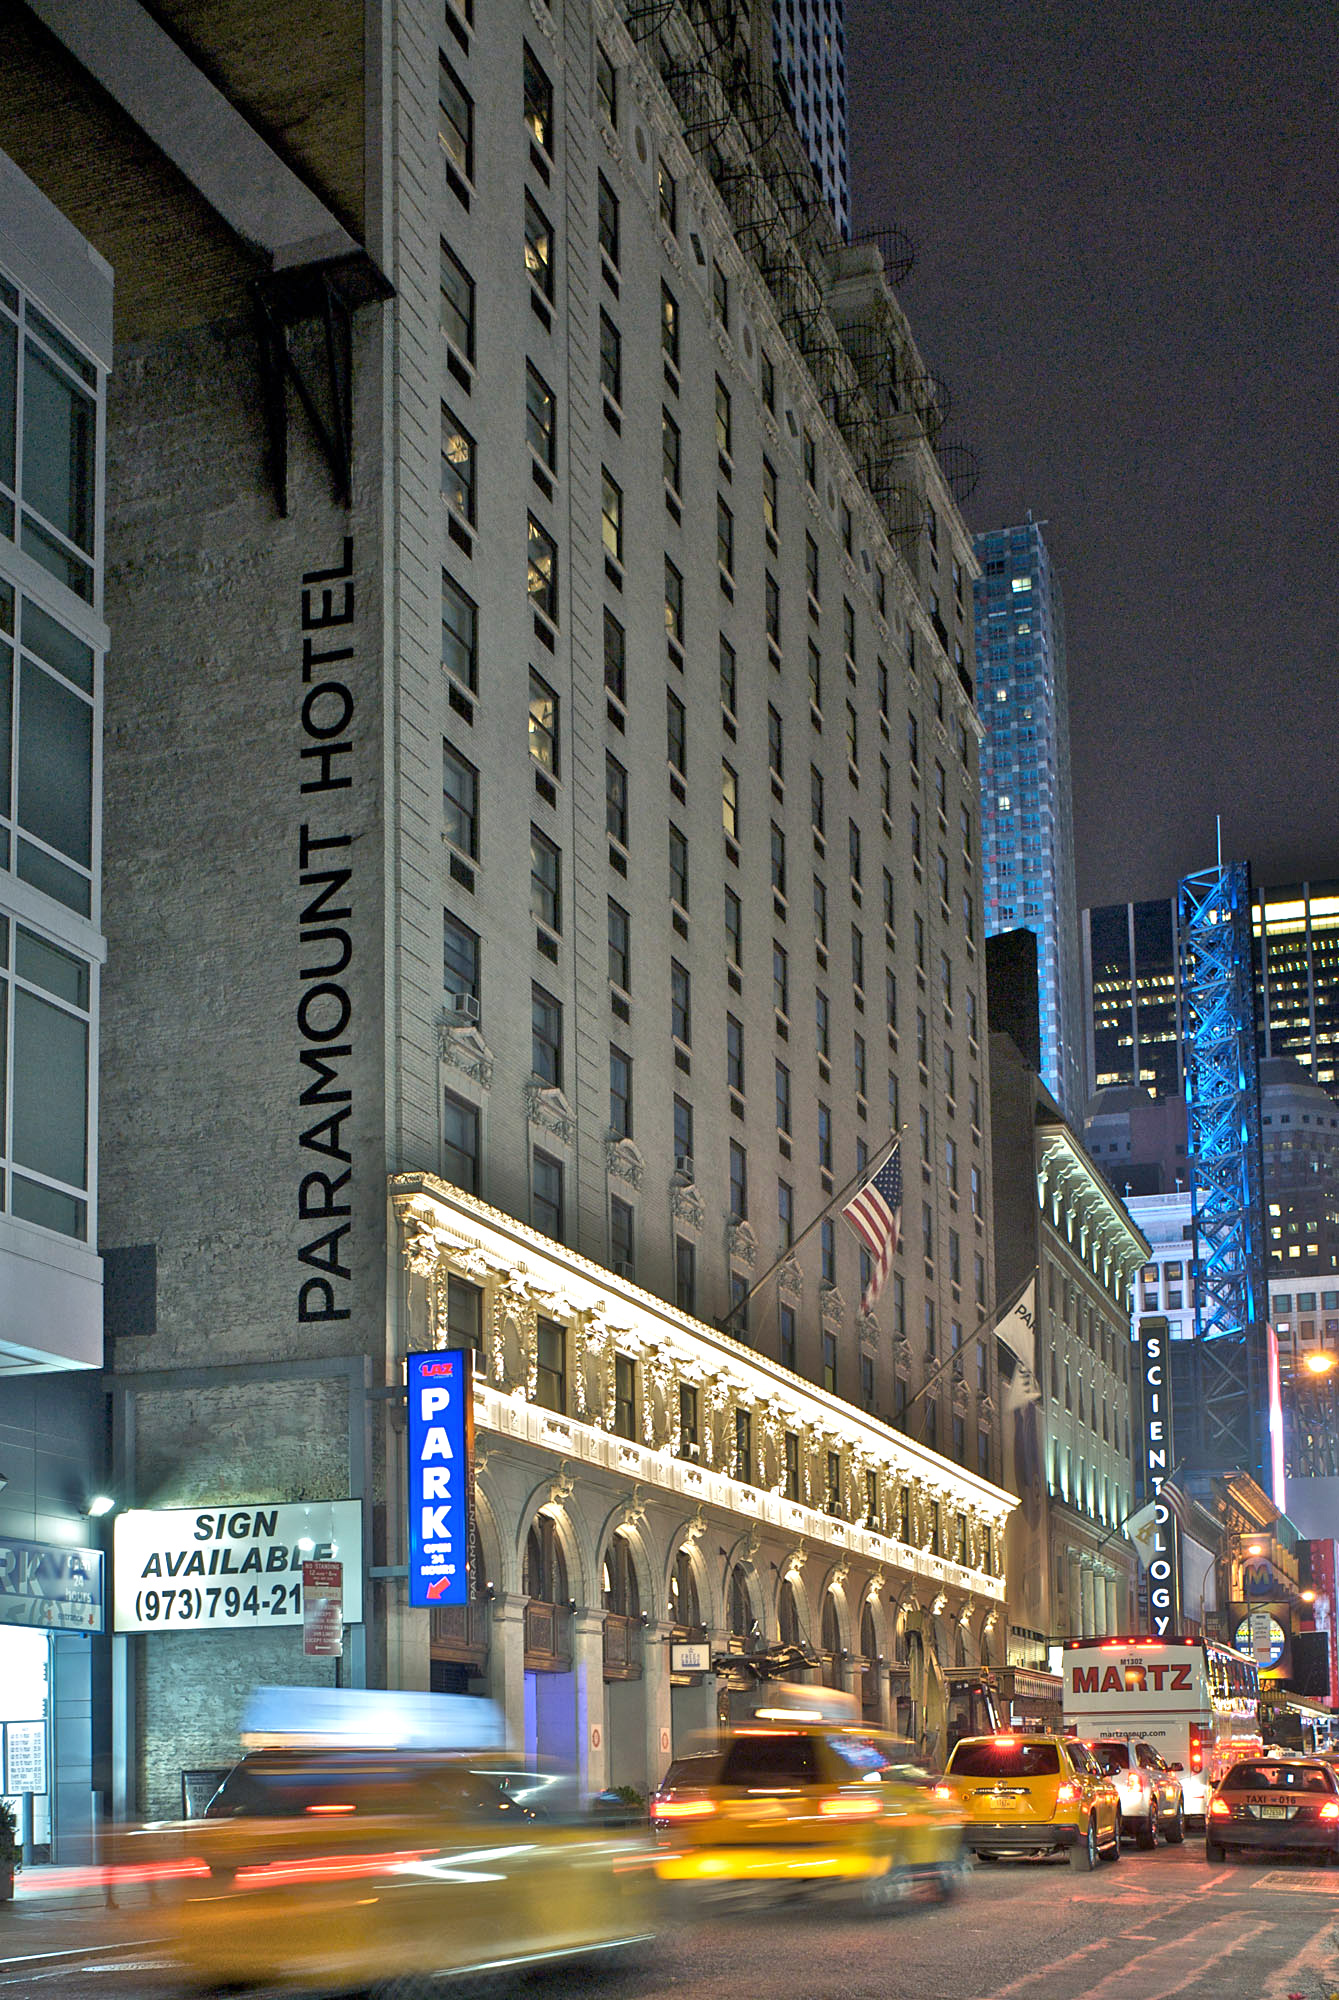 Signage for Paramount Hotel